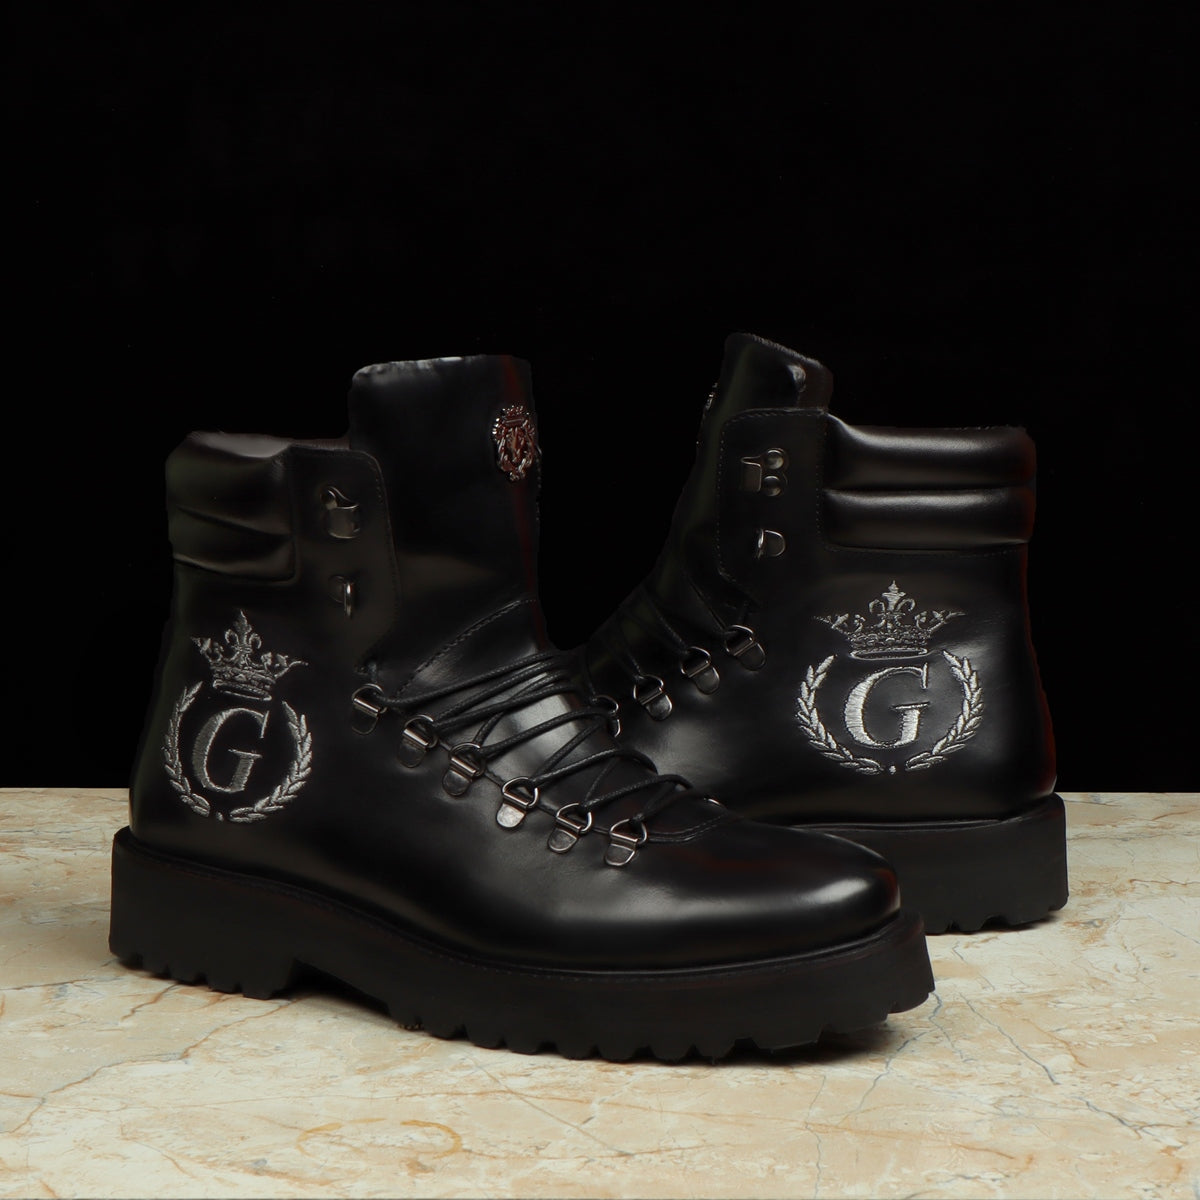 Bespoke "G" Initial Black Biker Crown Embroidery Boot For Men By Brune & Bareskin